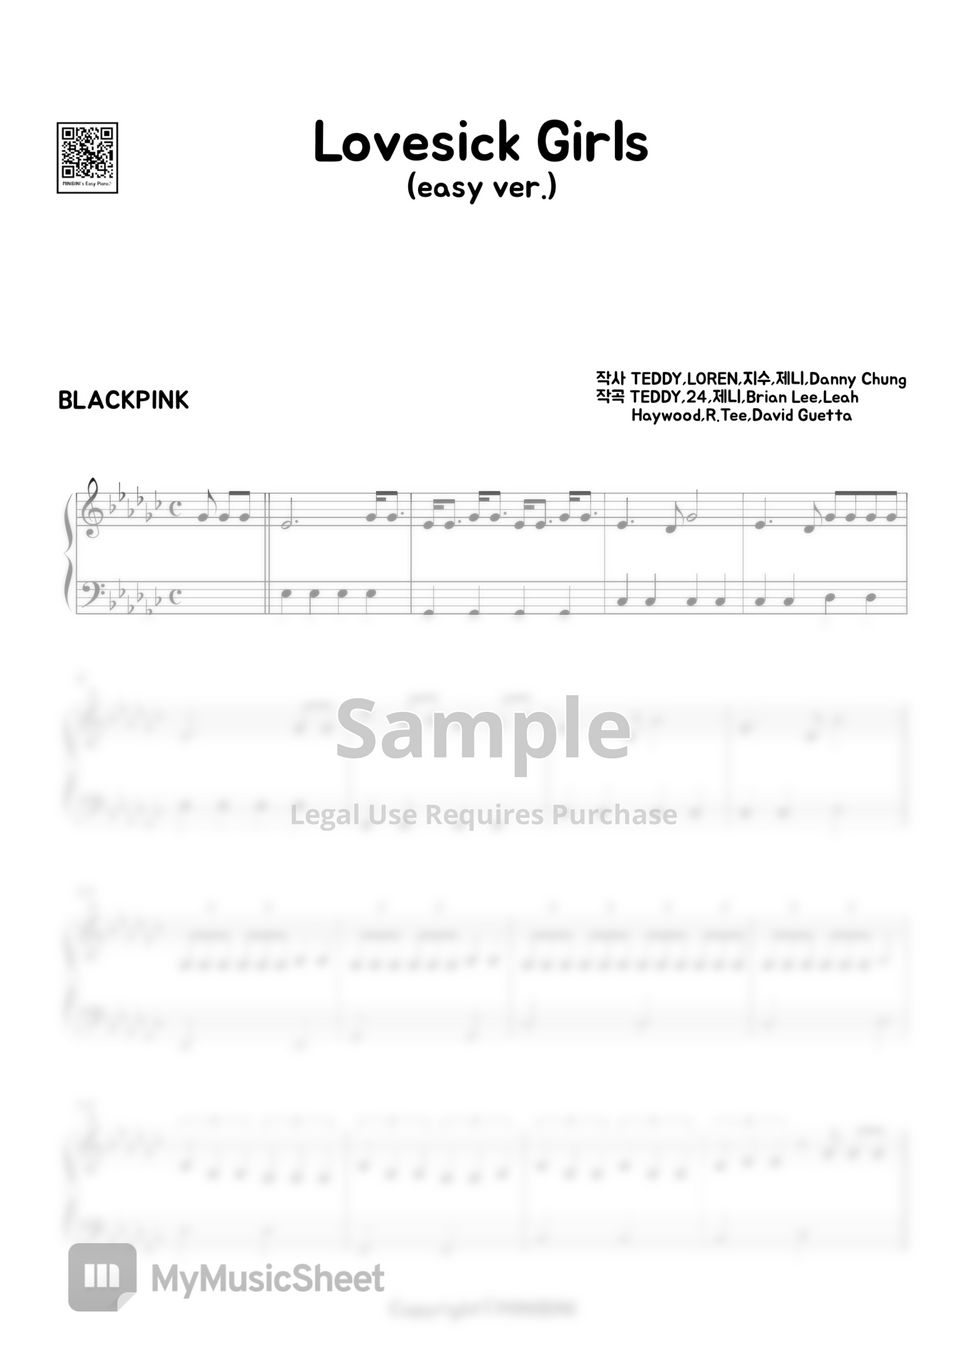 BLACKPINK (블랙핑크) - Lovesick Girls (Easy Version) by MINIBINI